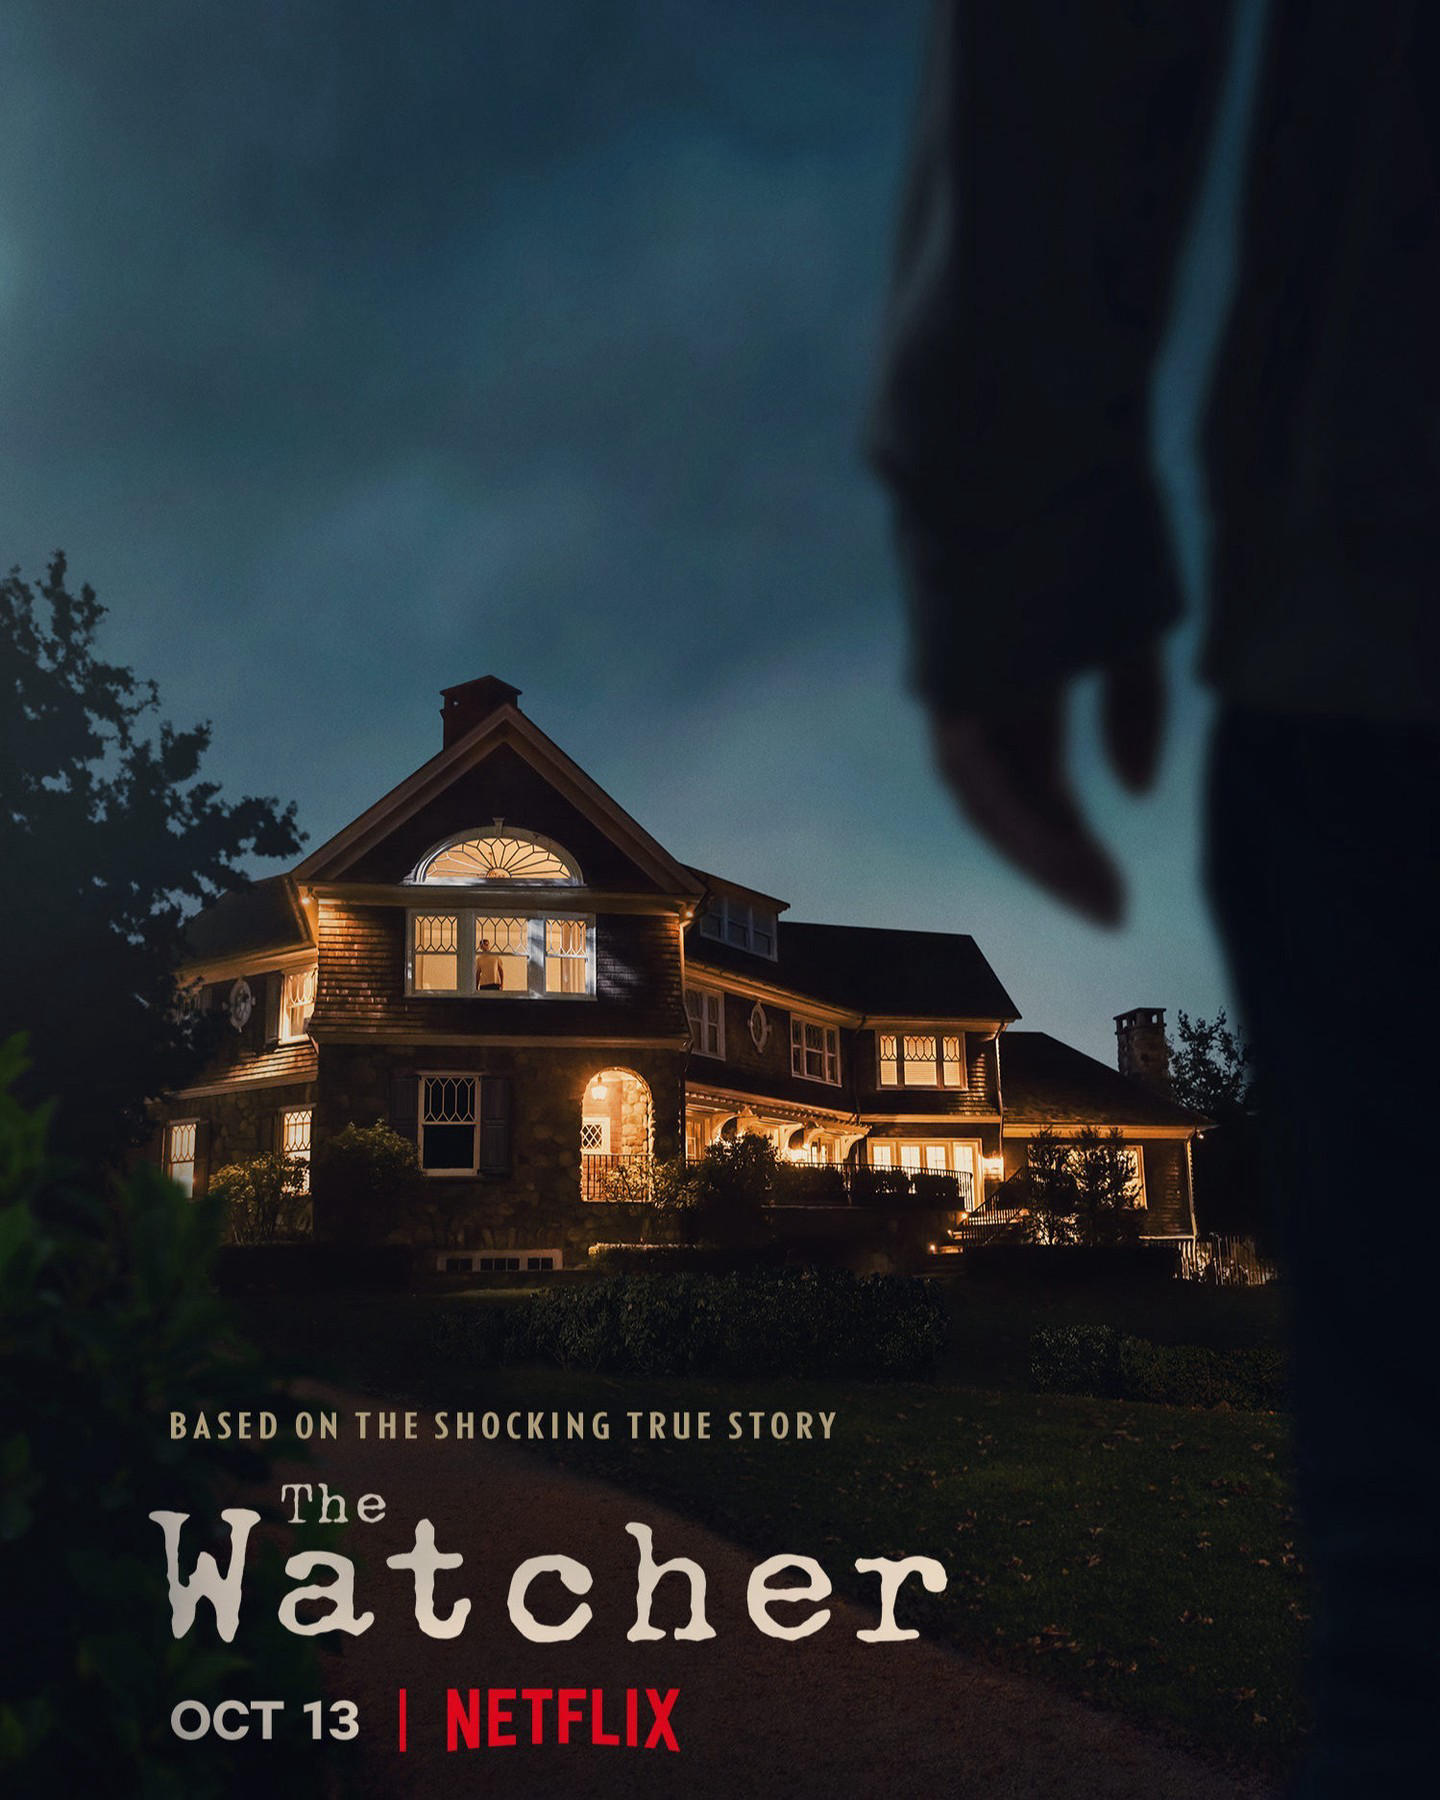 Rotten Tomatoes - Ryan Murphy's new series #TheWatcher premieres October 13 on Netflix